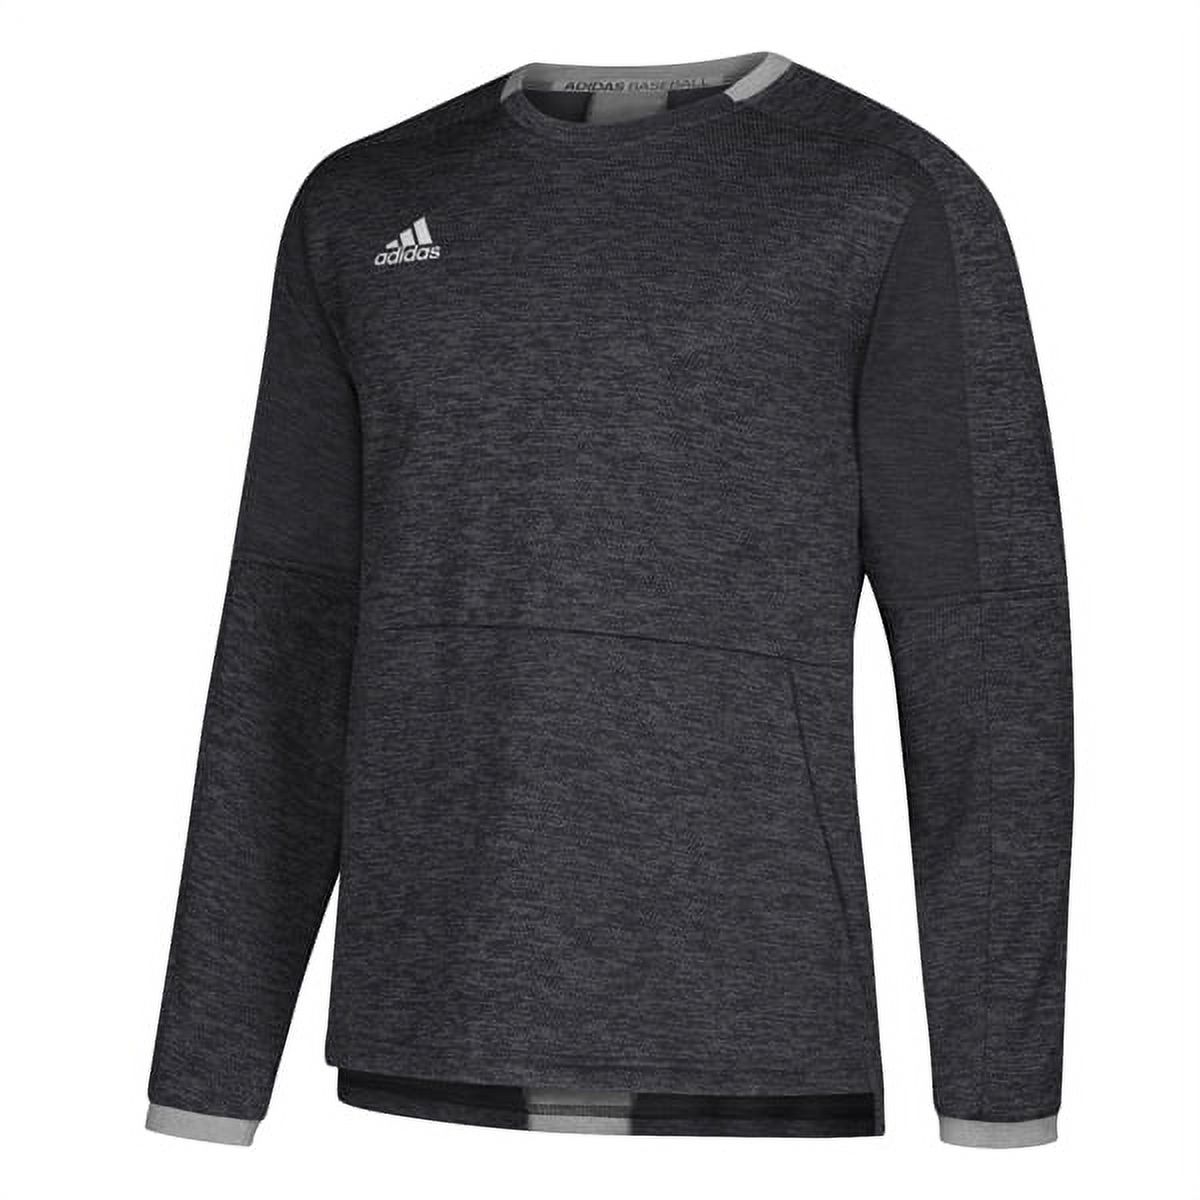 Adidas Men's Adult Fielders Choice Pullover Shirt Top Kangaroo Pocket (Black S) - image 1 of 2